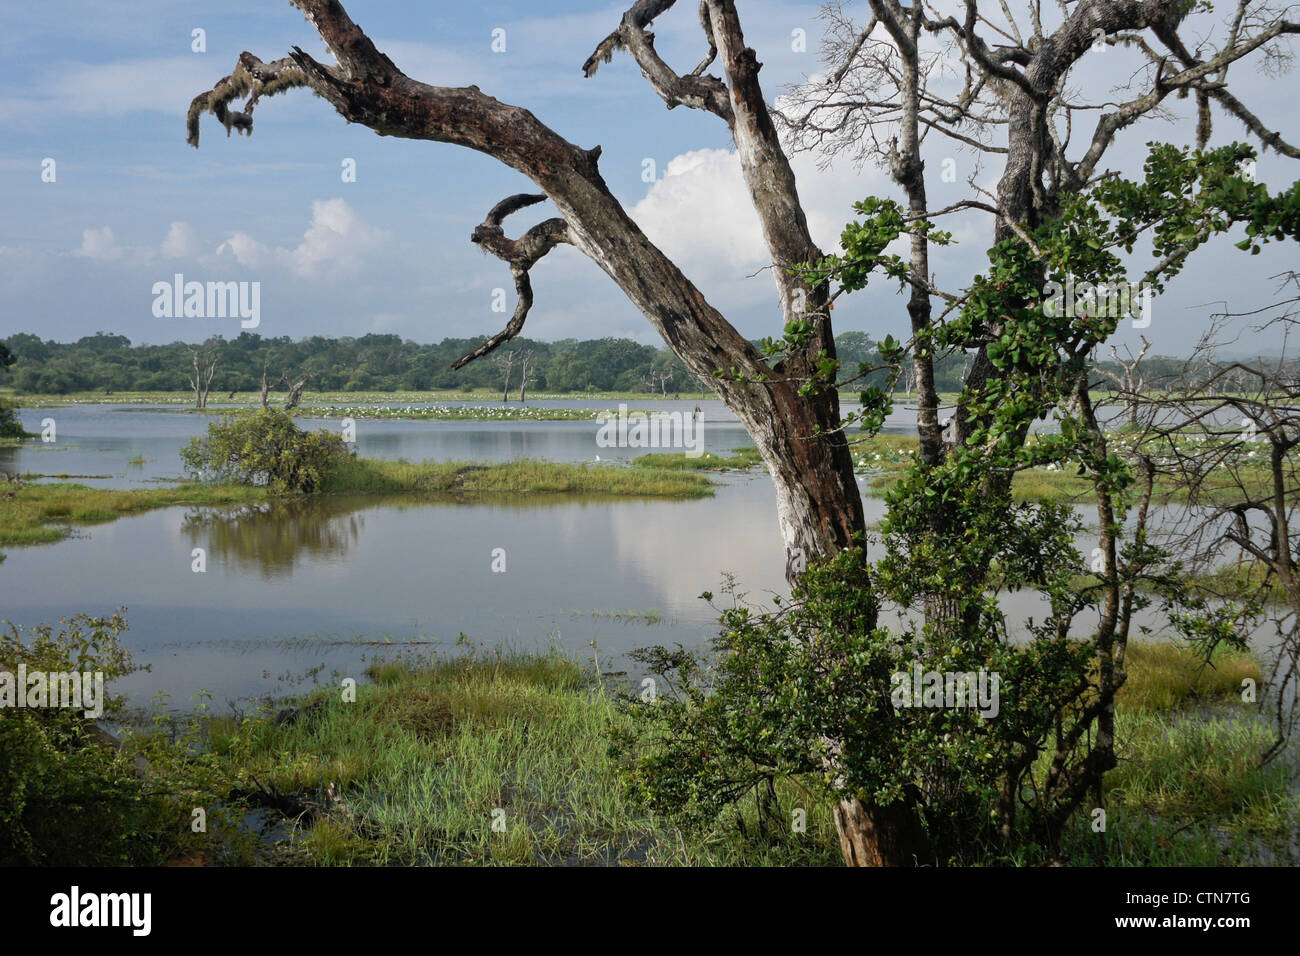 Reservoir and vegetation of Yala National Park, Sri Lanka Stock Photo